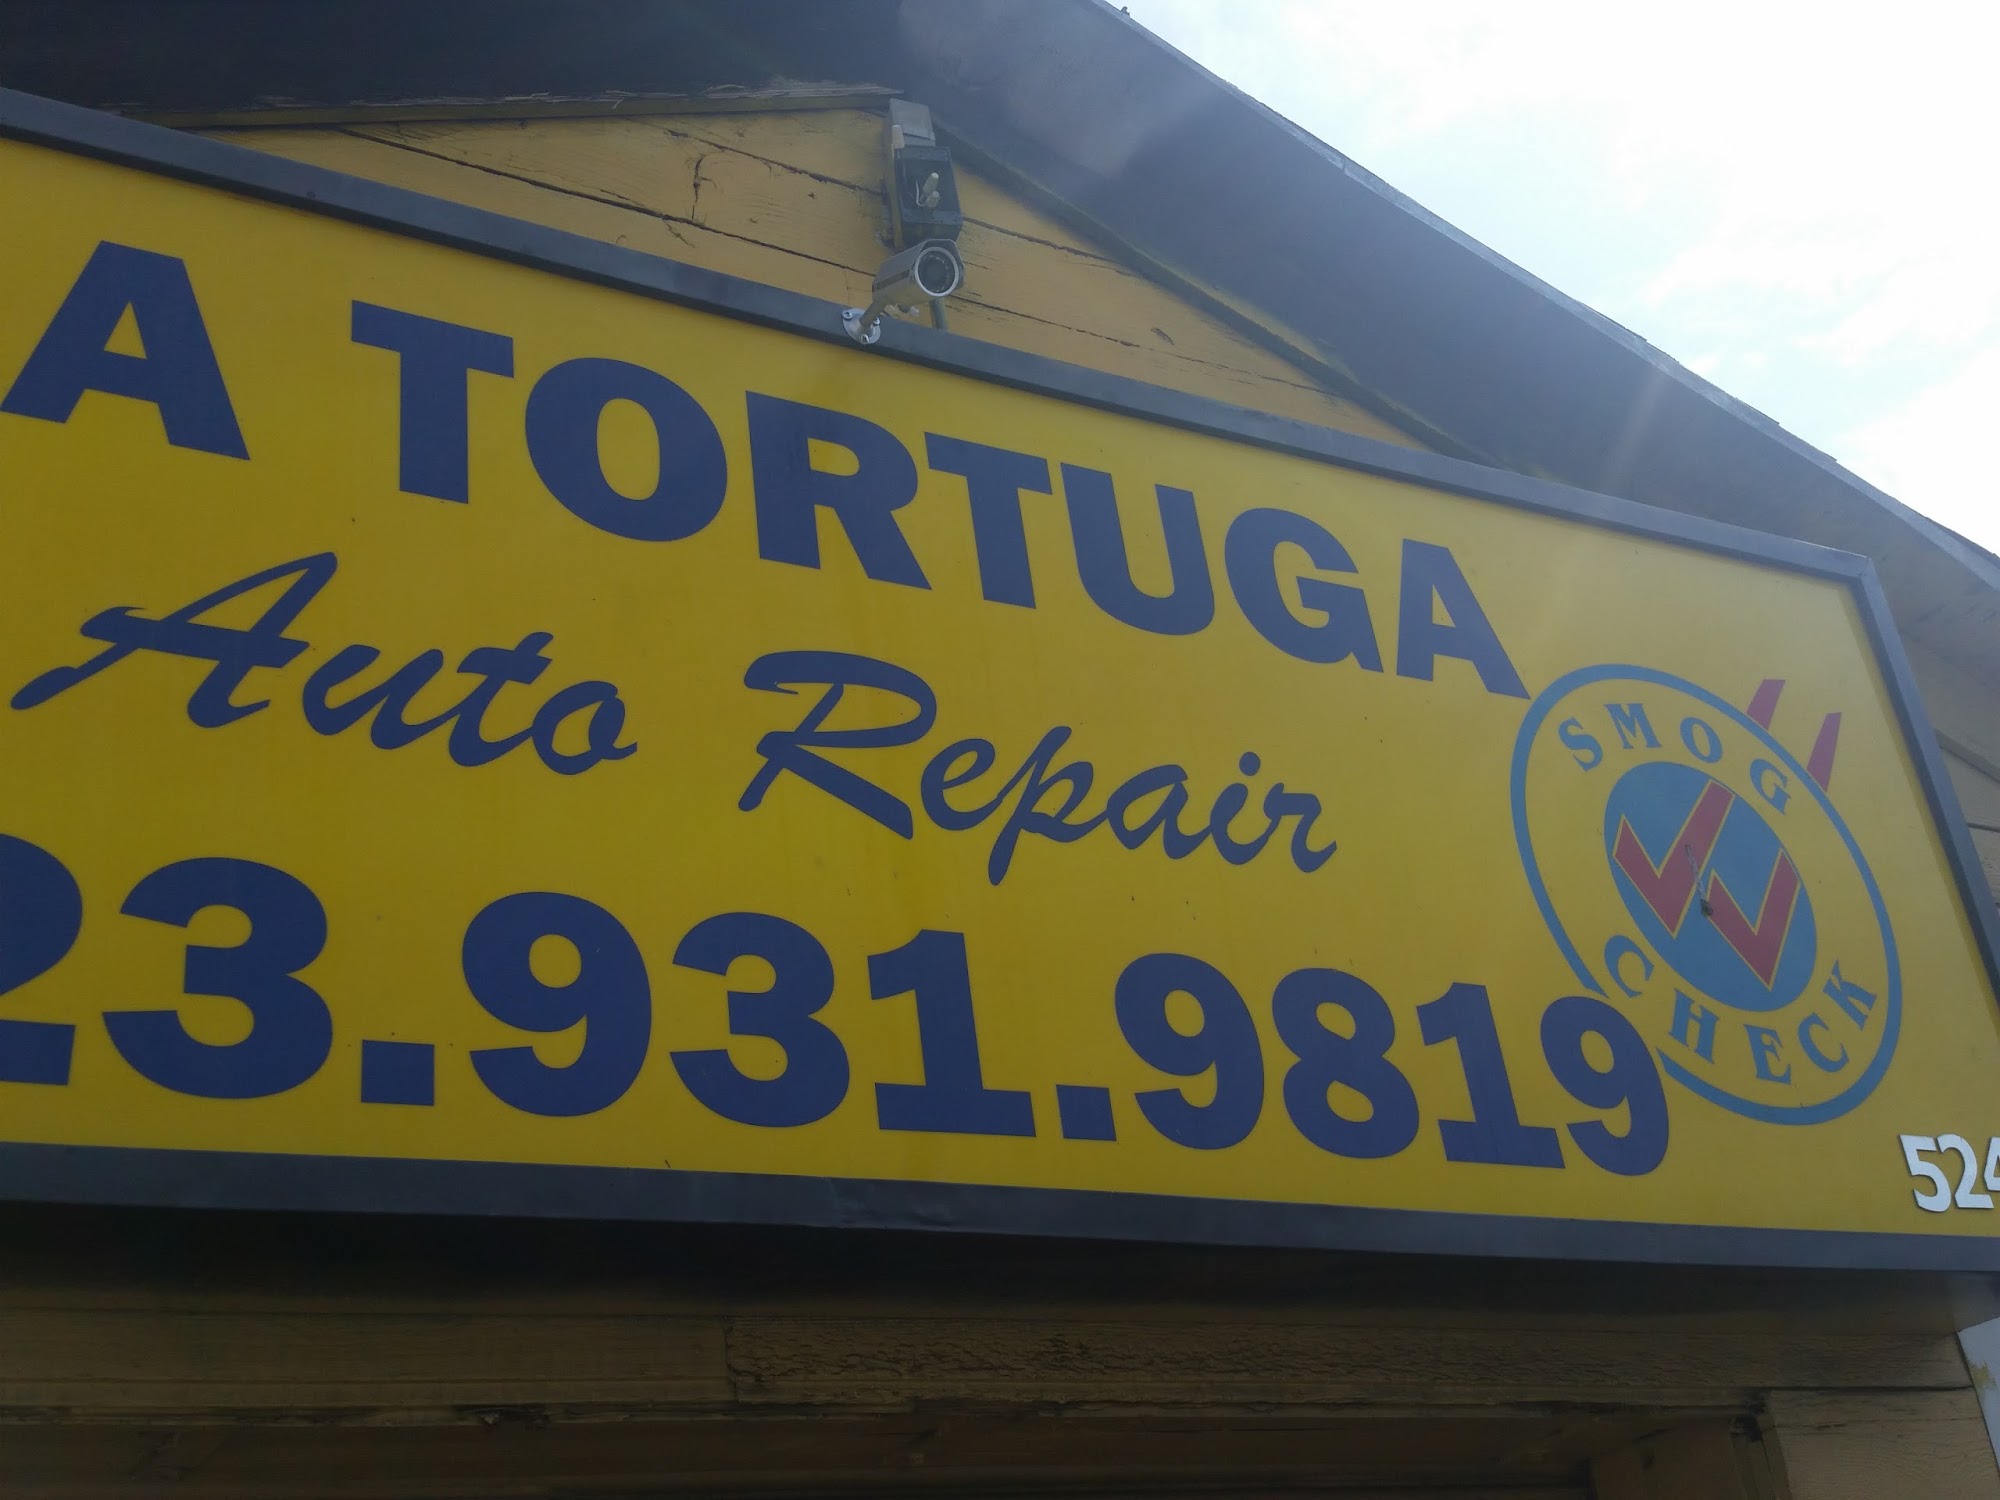 La Tortuga Auto Repair